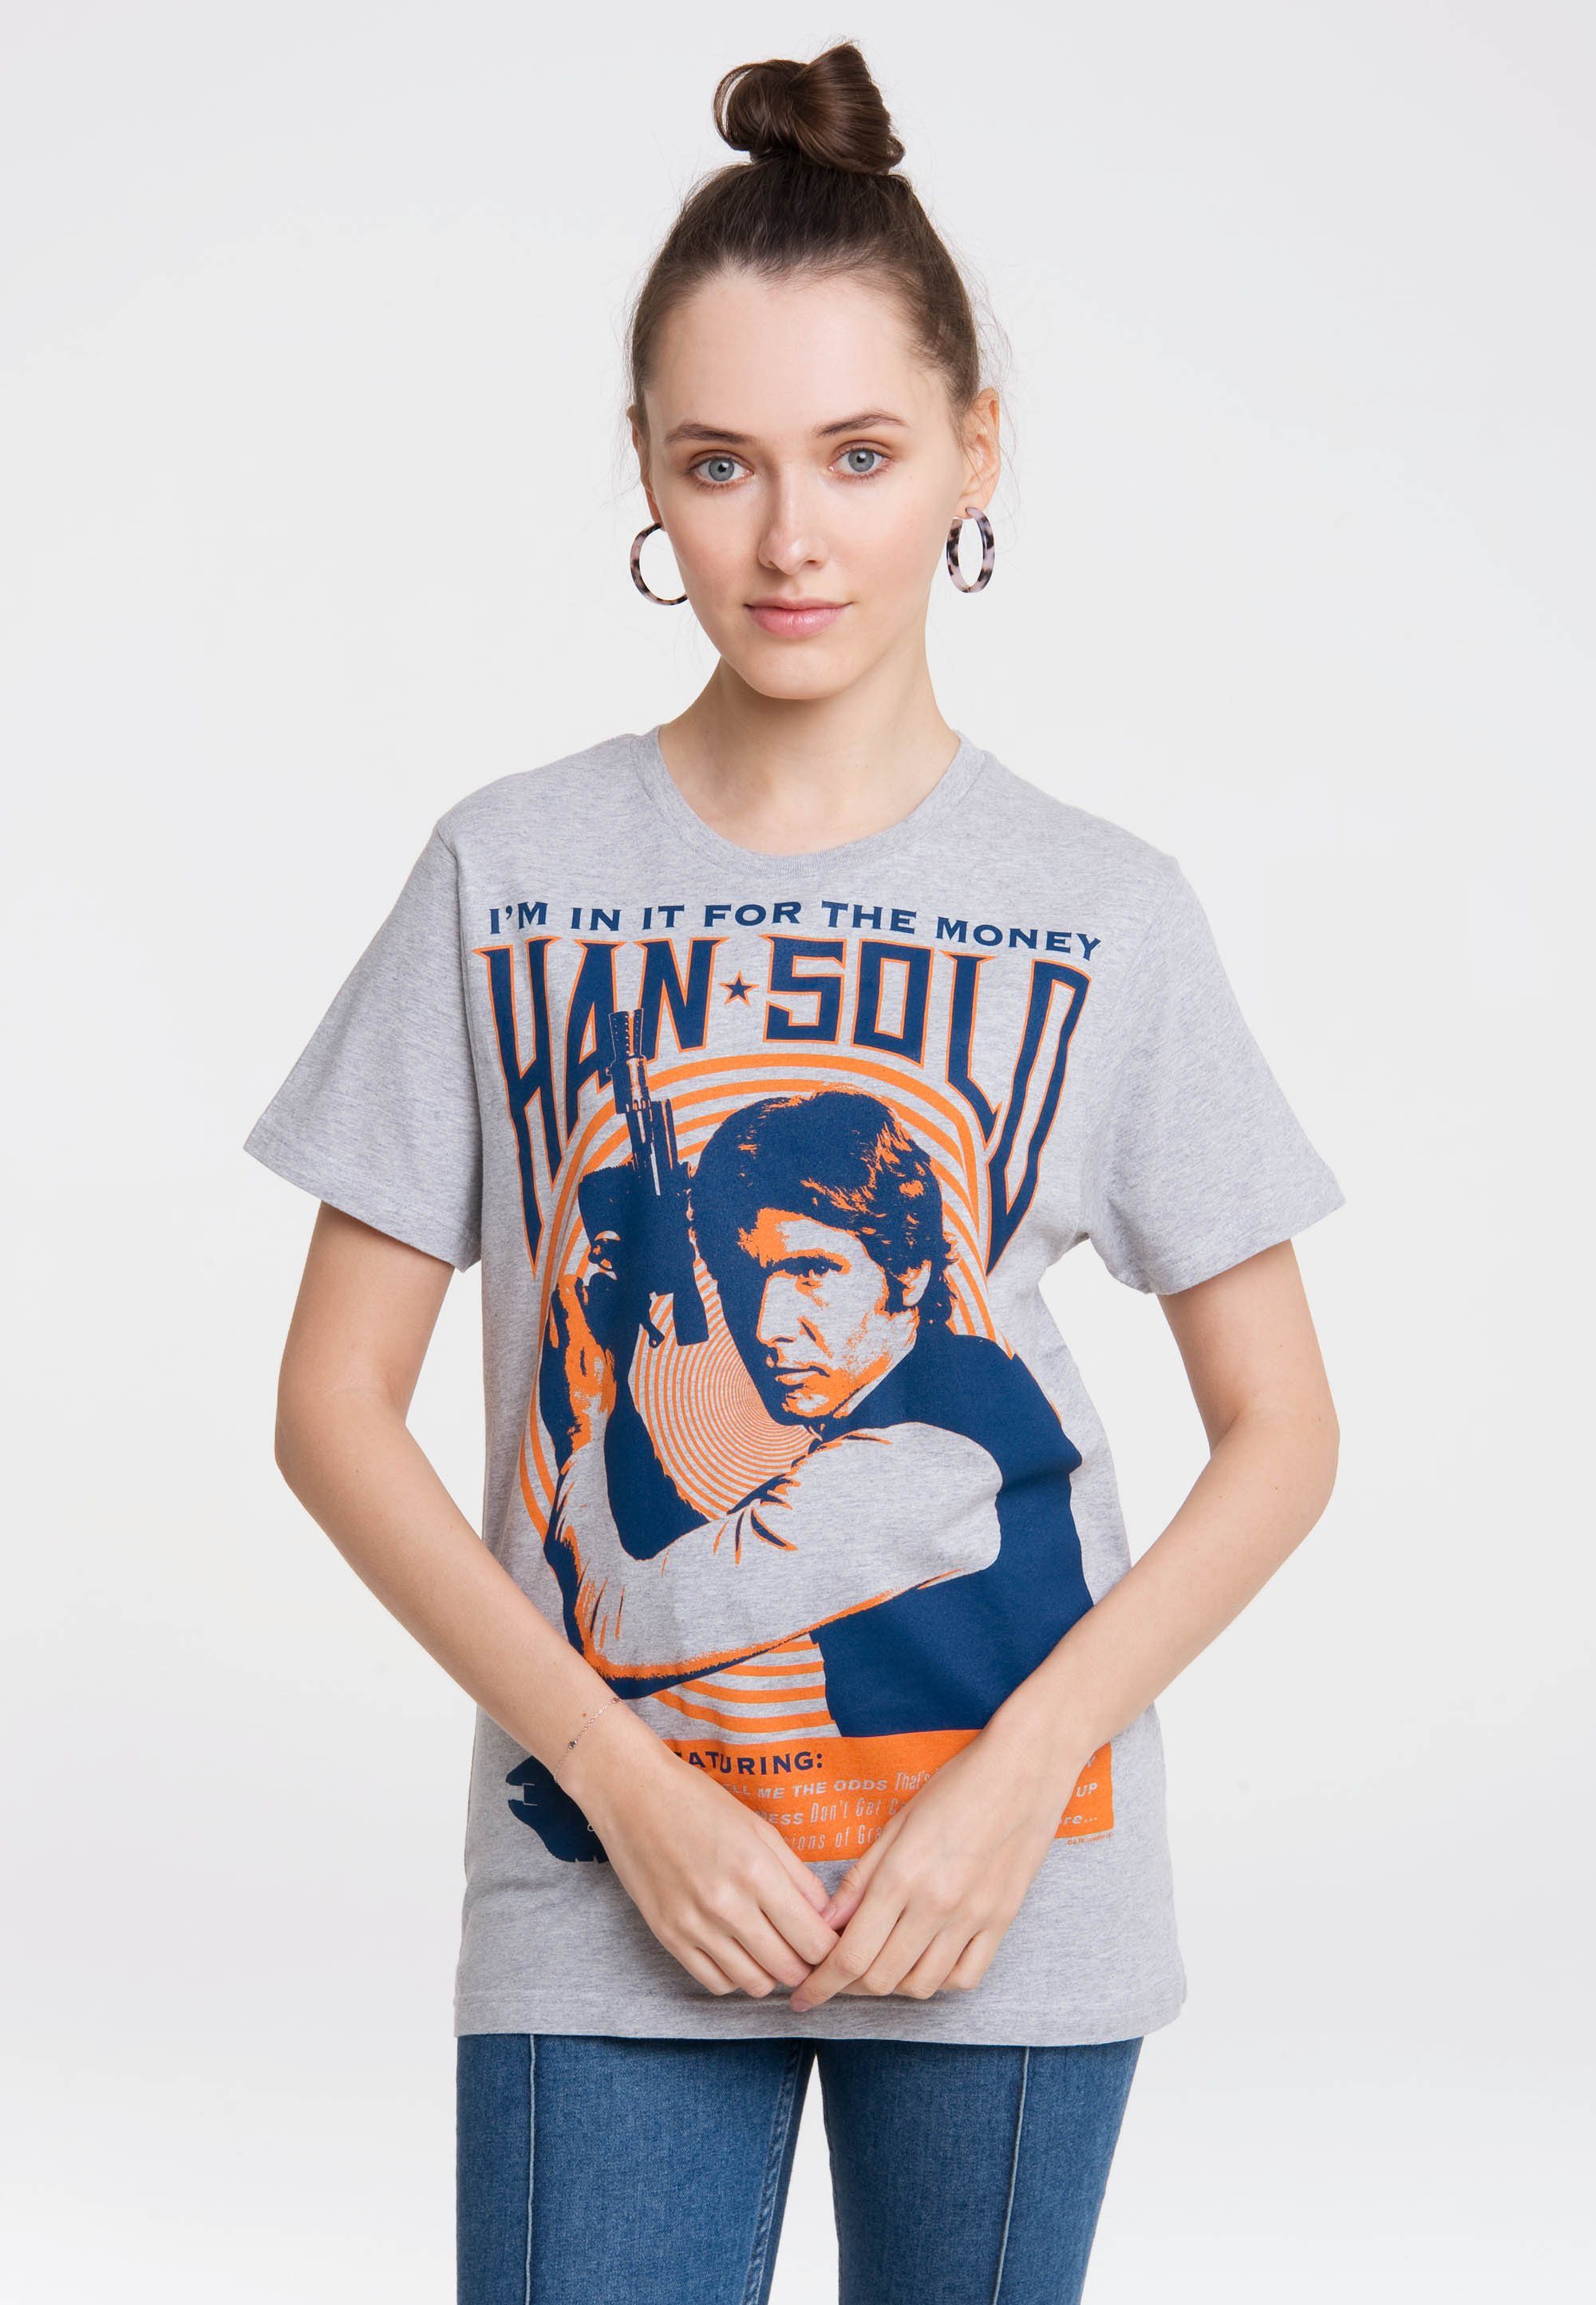 LOGOSHIRT T-Shirt Star Wars - Han Solo - Money mit Han Solo-Print | T-Shirts